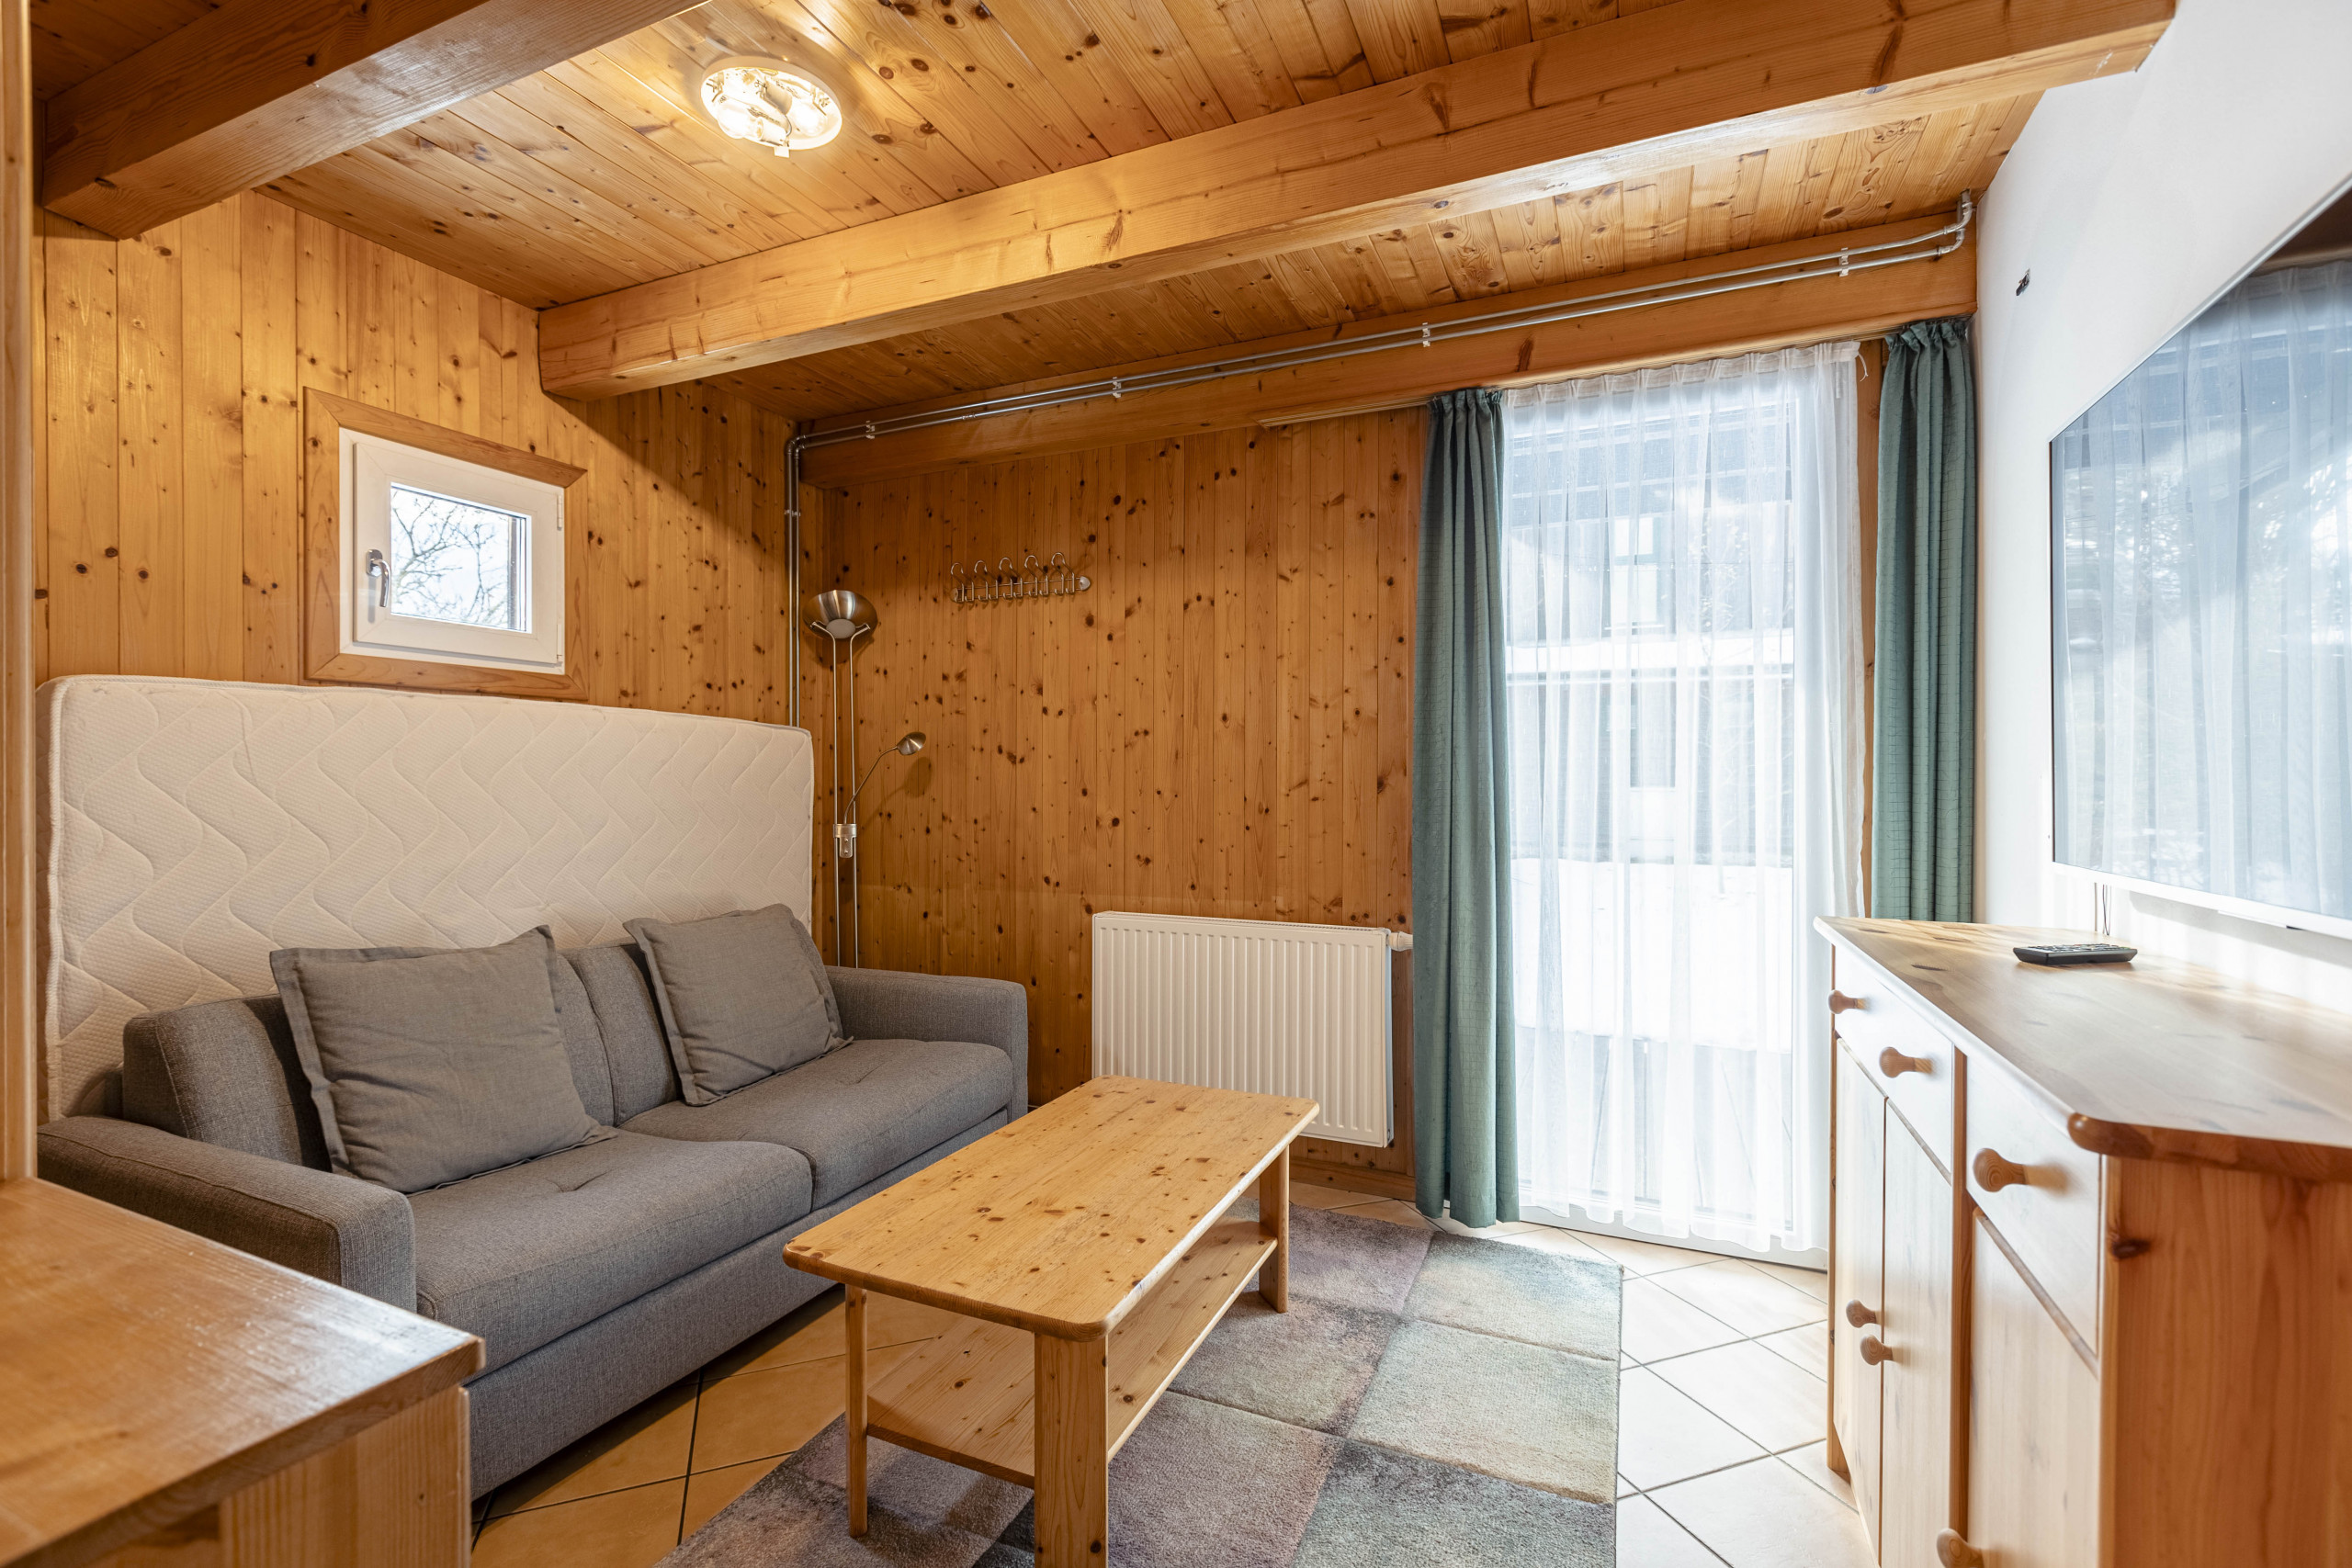  in St. Georgen am Kreischberg - Holiday home with 3 bedrooms